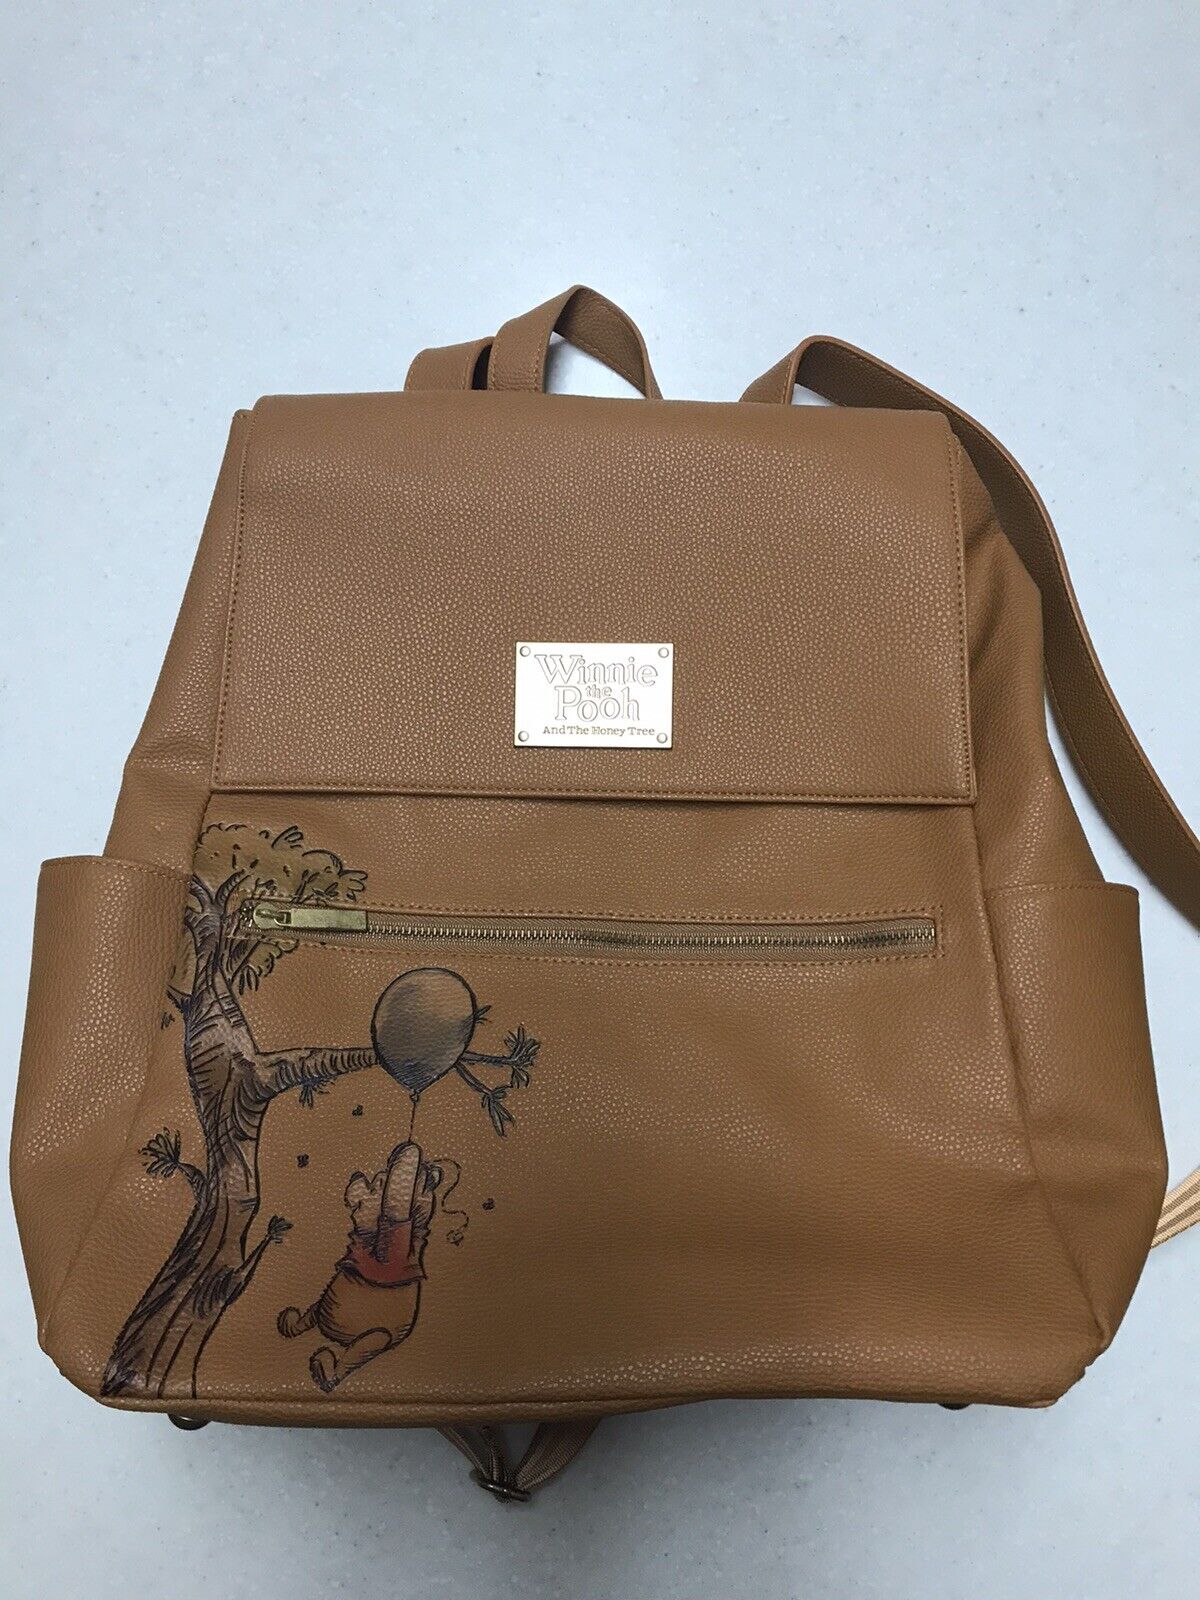 Disney Winnie The Pooh 55th Anniversary Backpack Very Rare